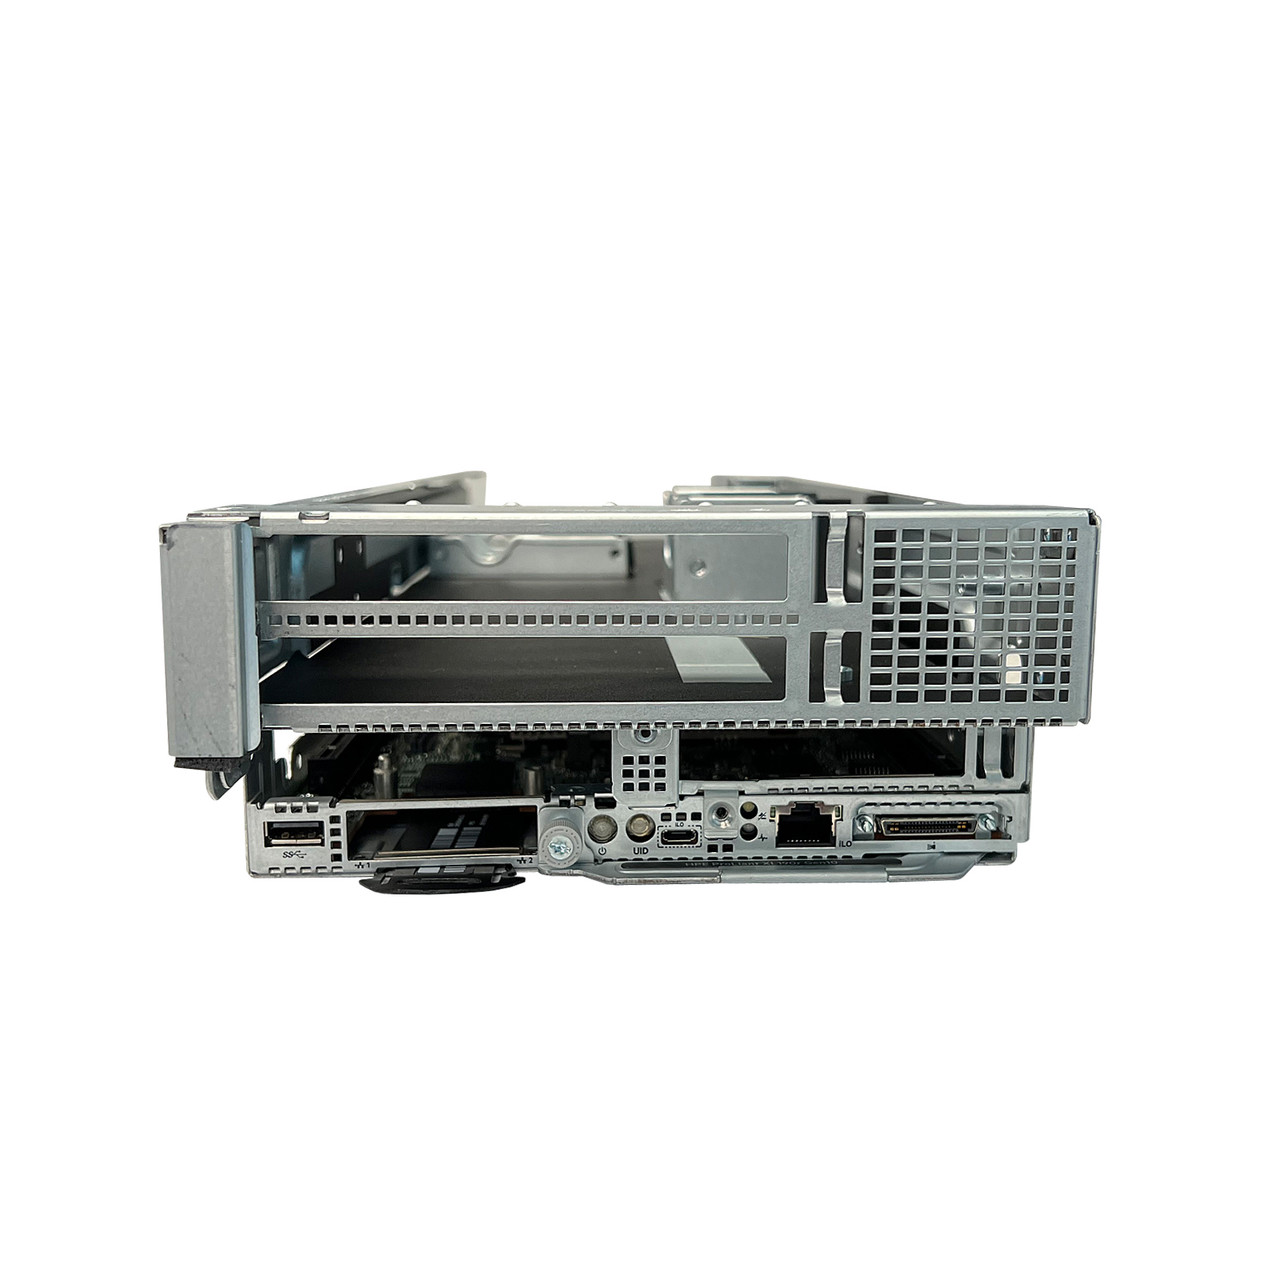 HPe 867056-B21 Proliant XL190R Gen10 CTO Server